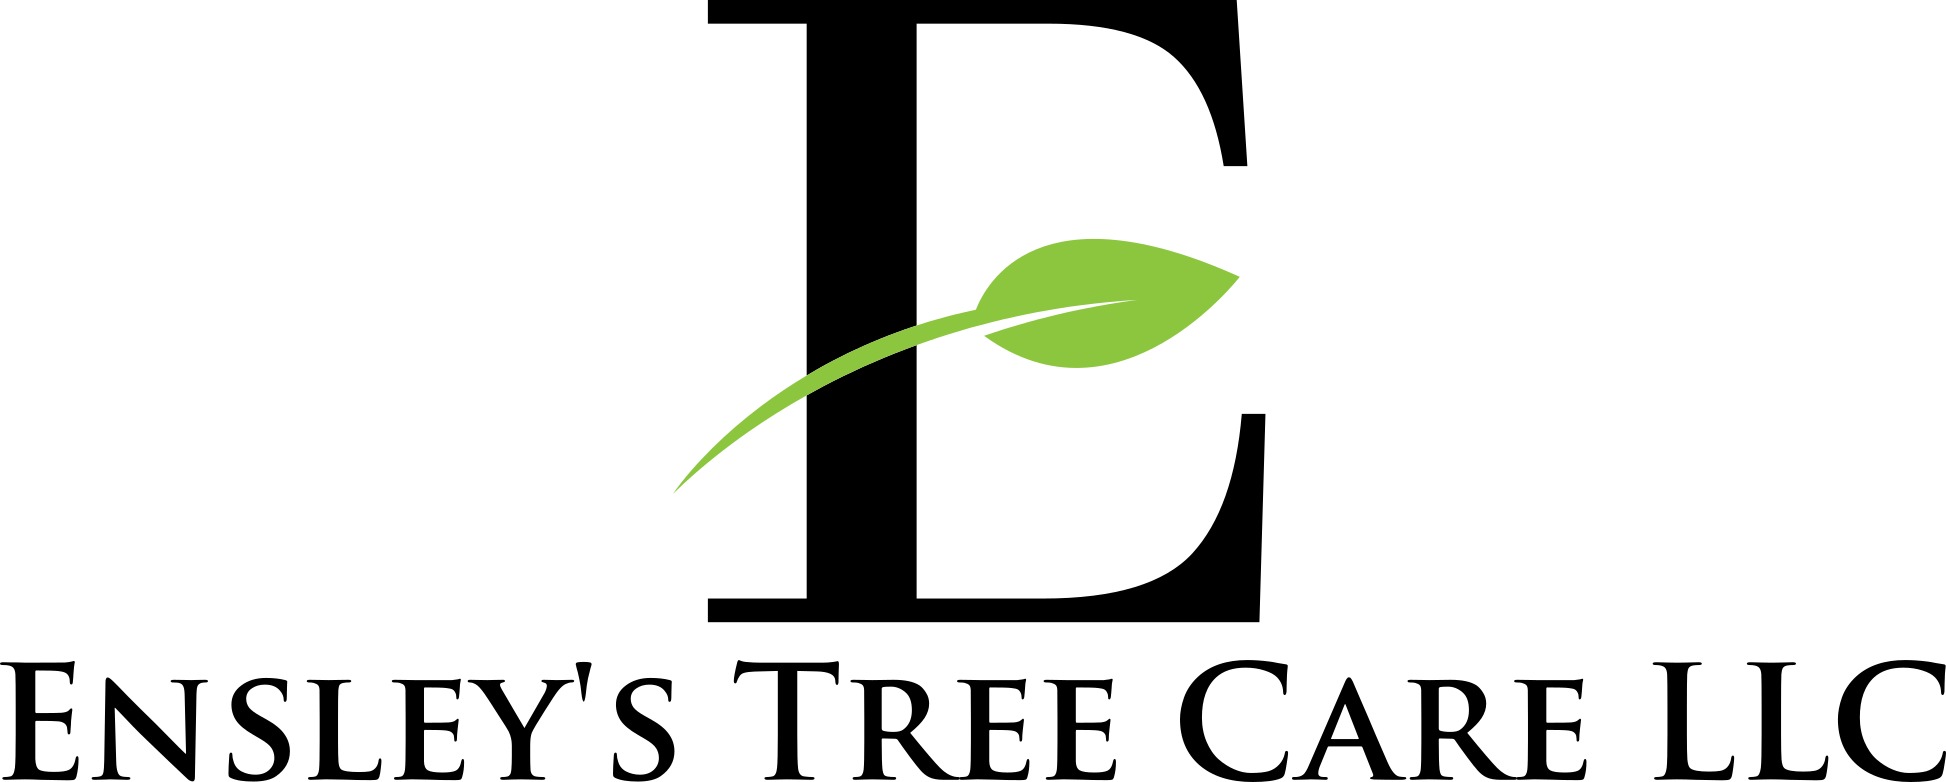 Ensley's Tree Care, LLC Logo